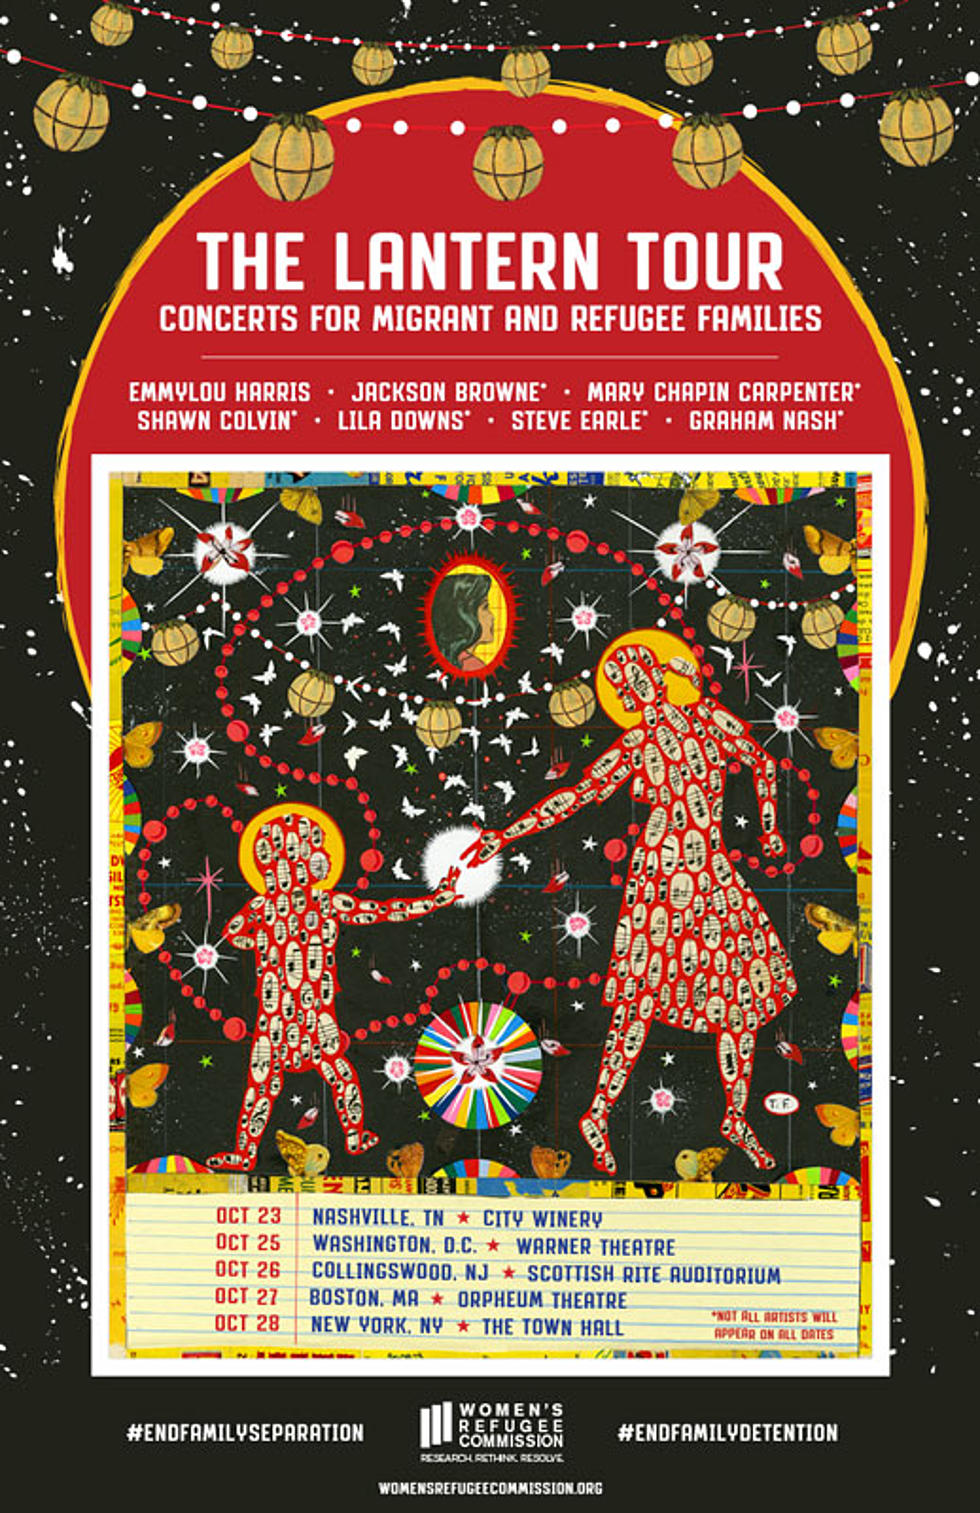 The Lantern Tour, feat. Jackson Browne, Graham Nash and more